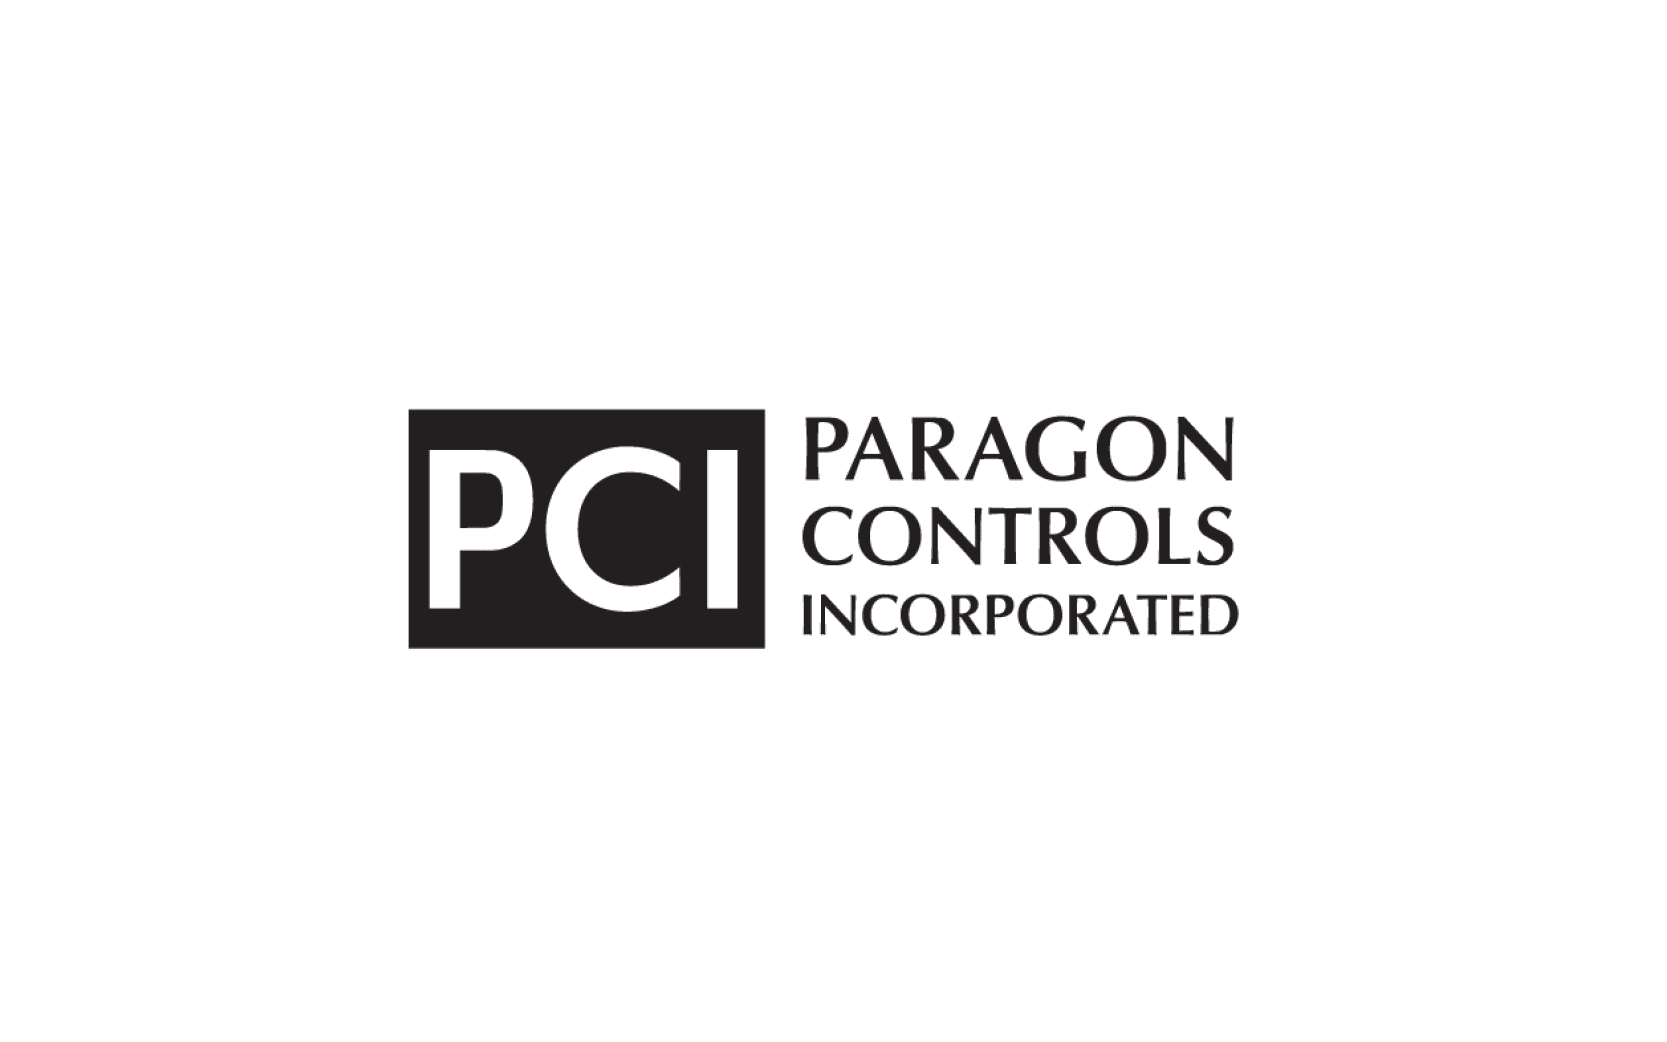 PCI - Paragon Controls Incorporated